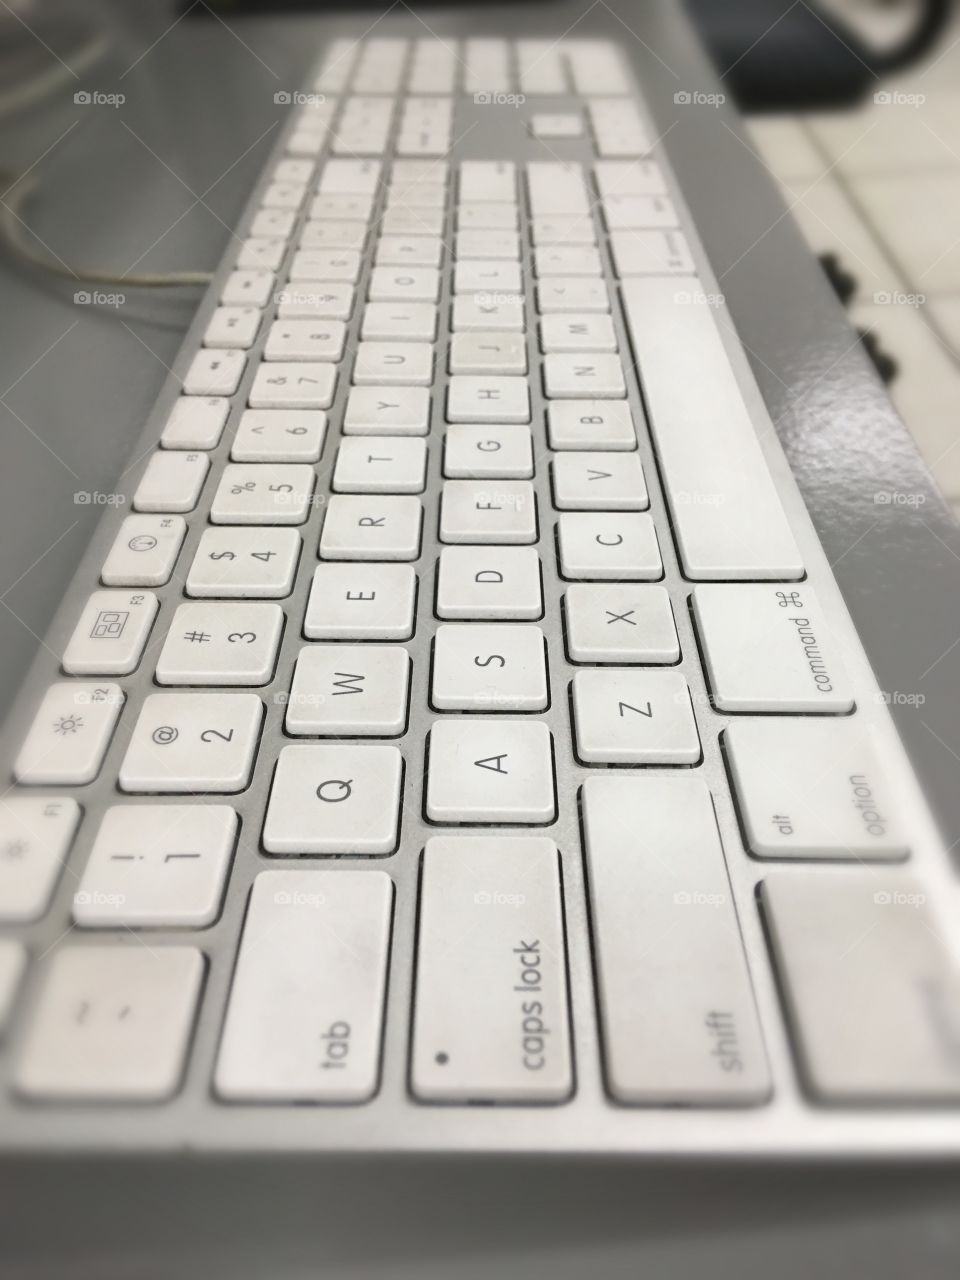 IMac keyboard